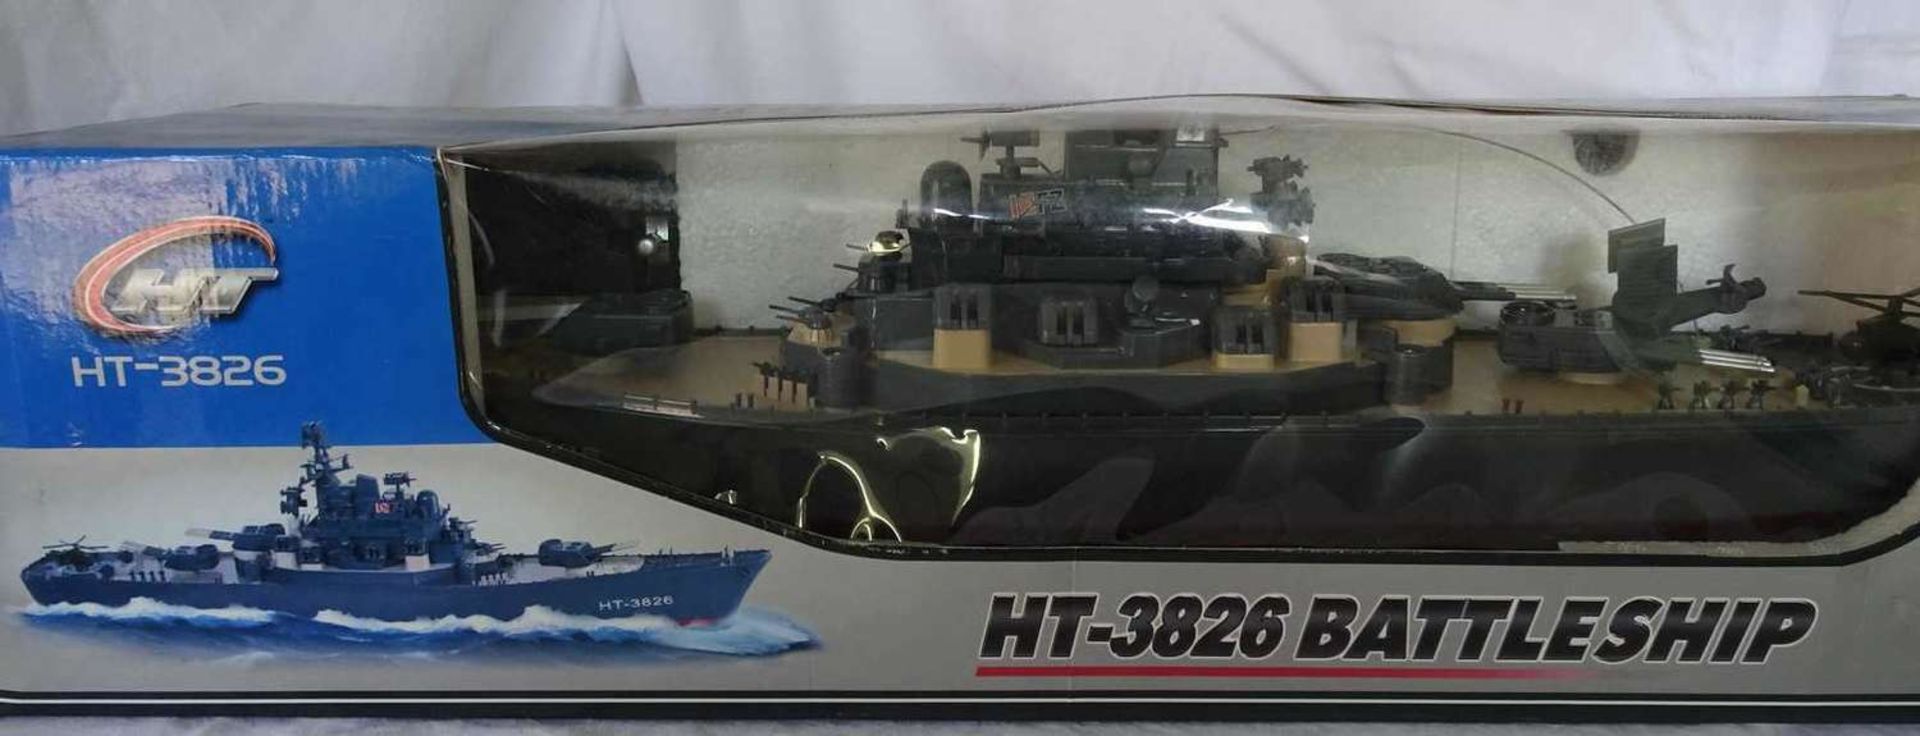 HTI 3826 Battleship, 1: 250, with controllerHTI 3826 Battleship, 1:250, mit Kontroller